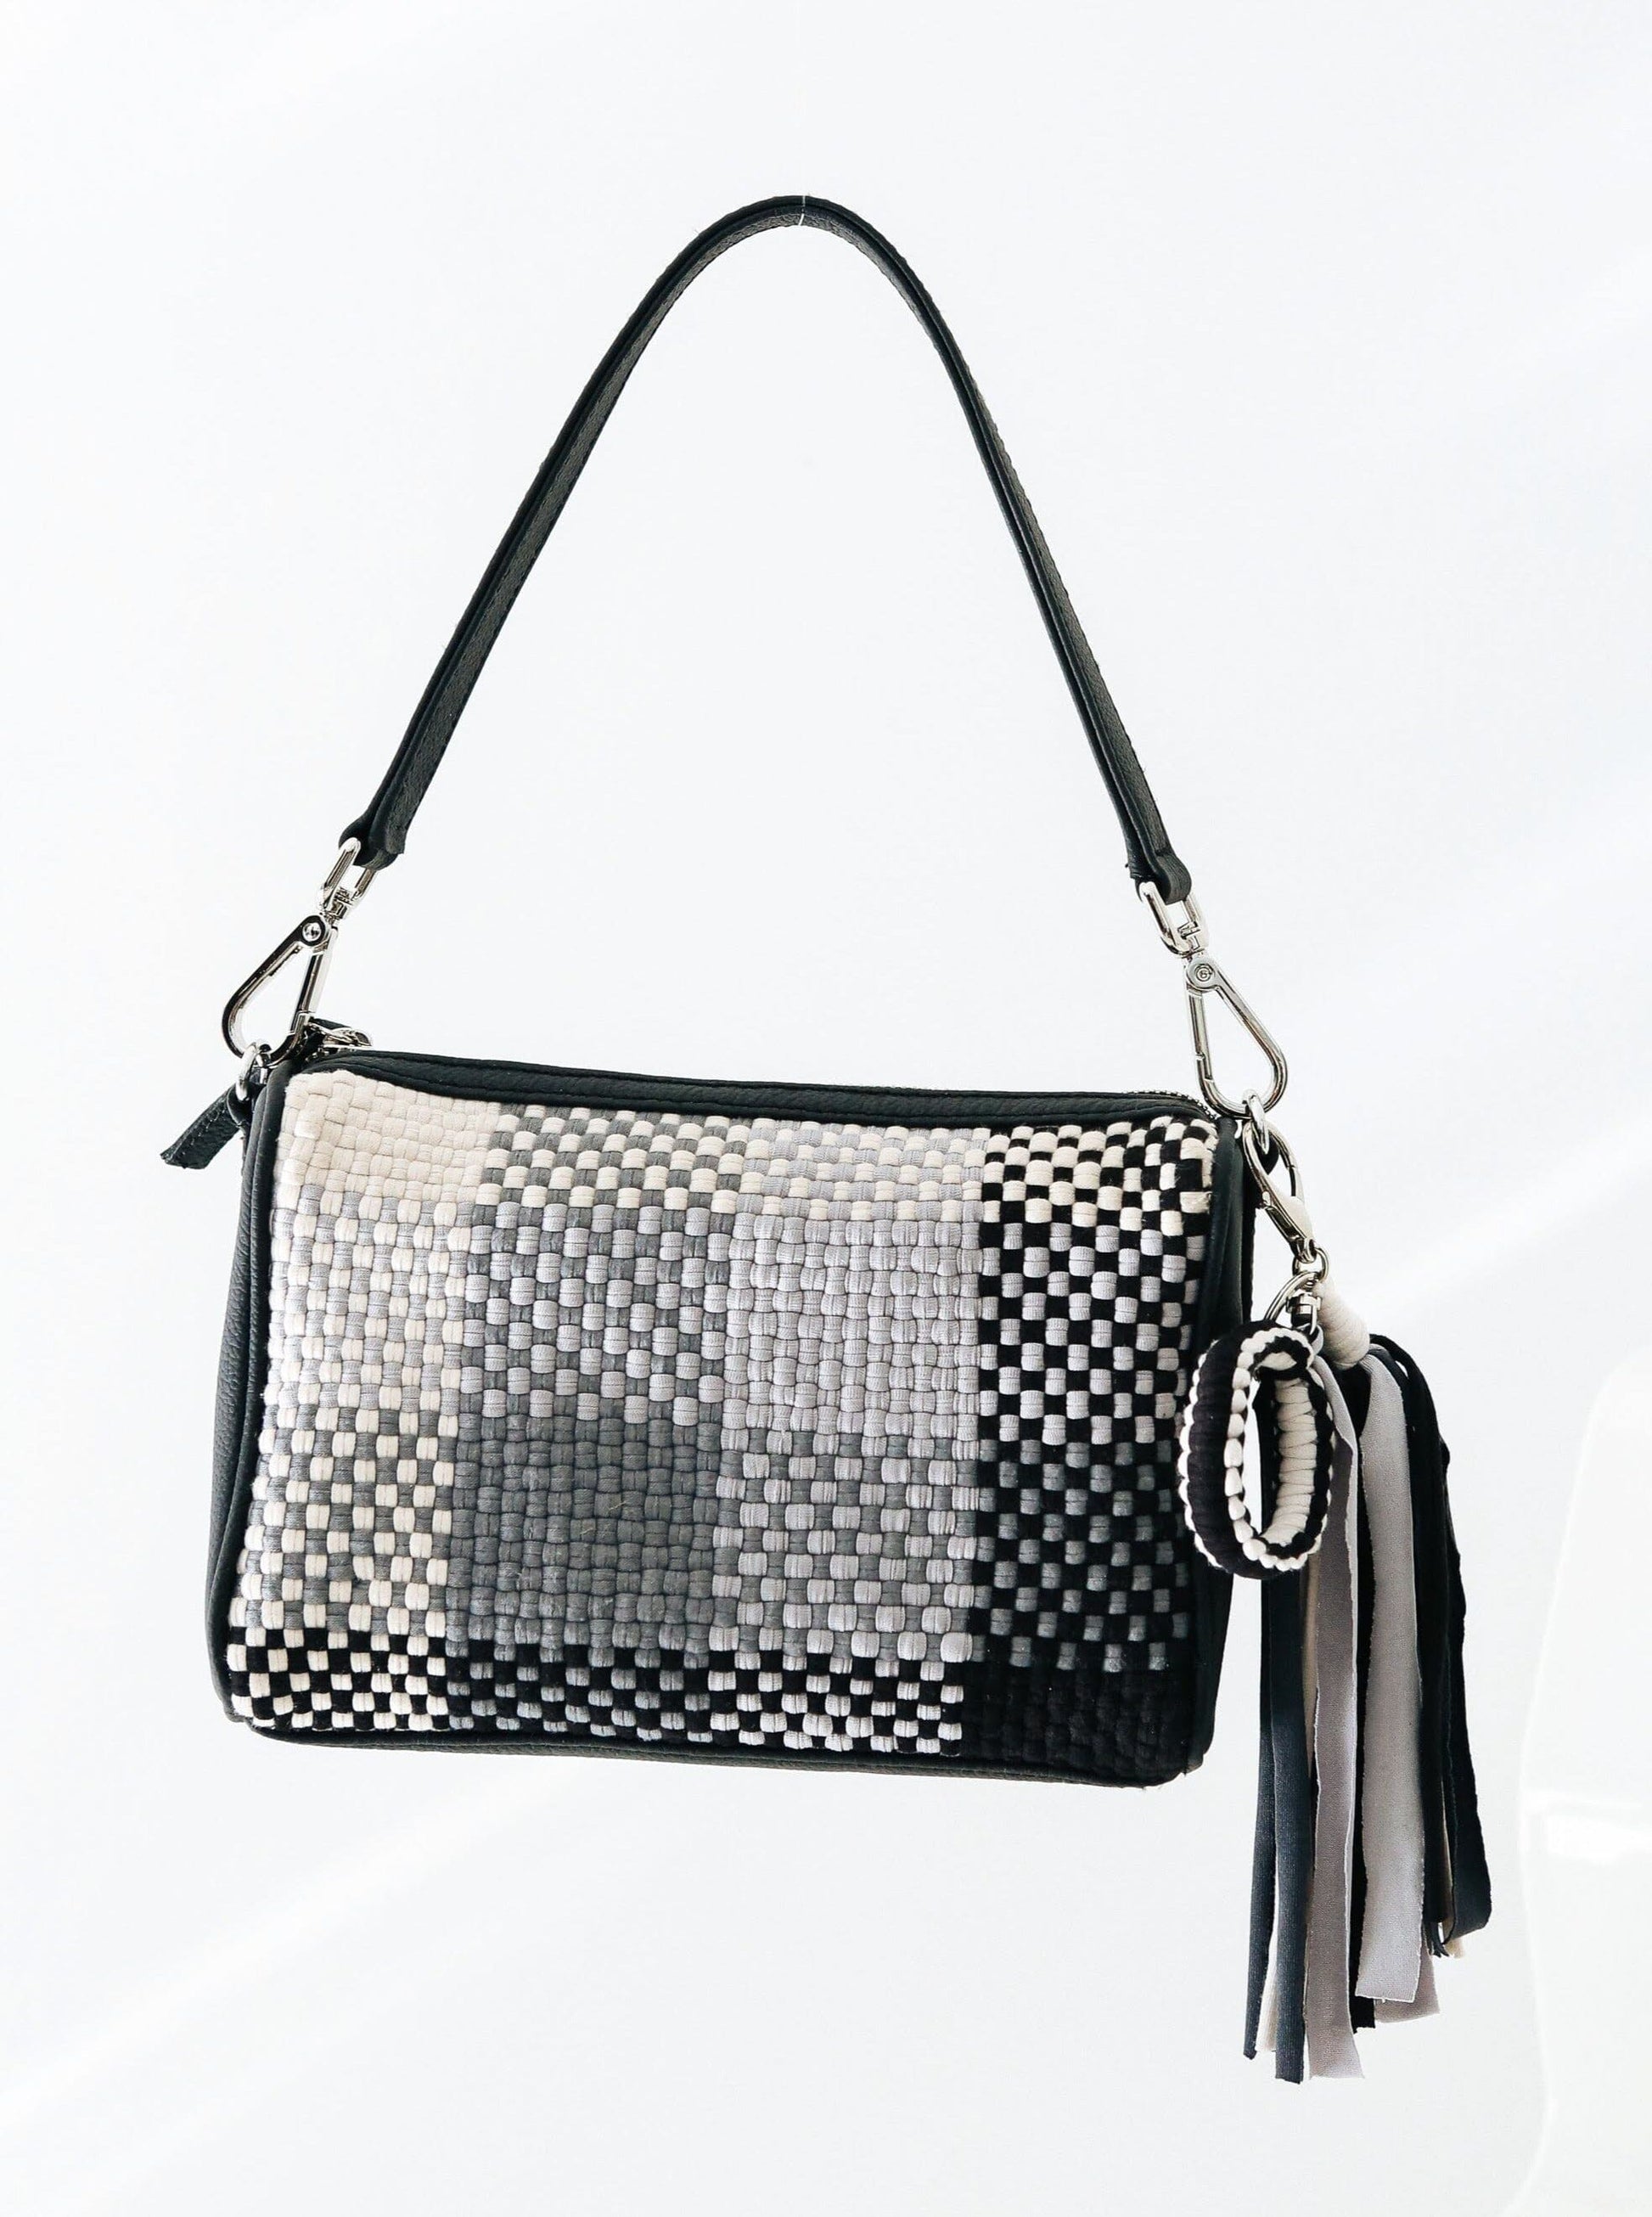 [R2R x OPPO] Pixel Crossbody Bag by David Guison Fashion Rags2Riches